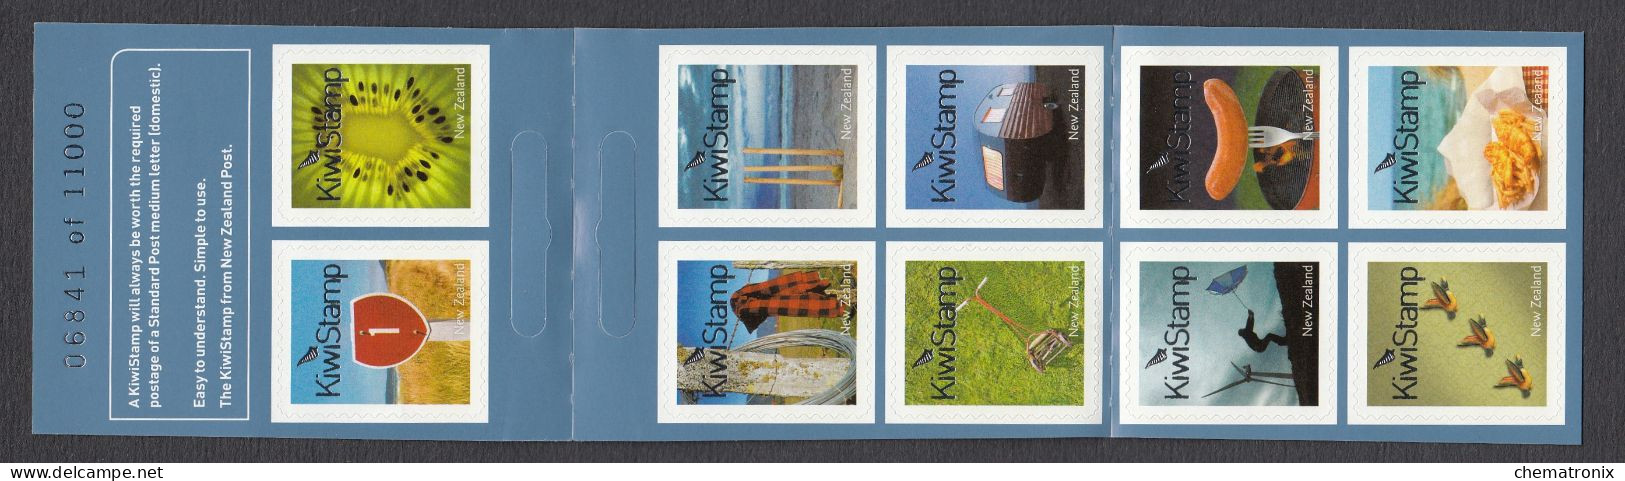 New Zealand 2009 - Kiwi Stamps - Limited Self-Adhesive Booklet - MNH ** - Markenheftchen